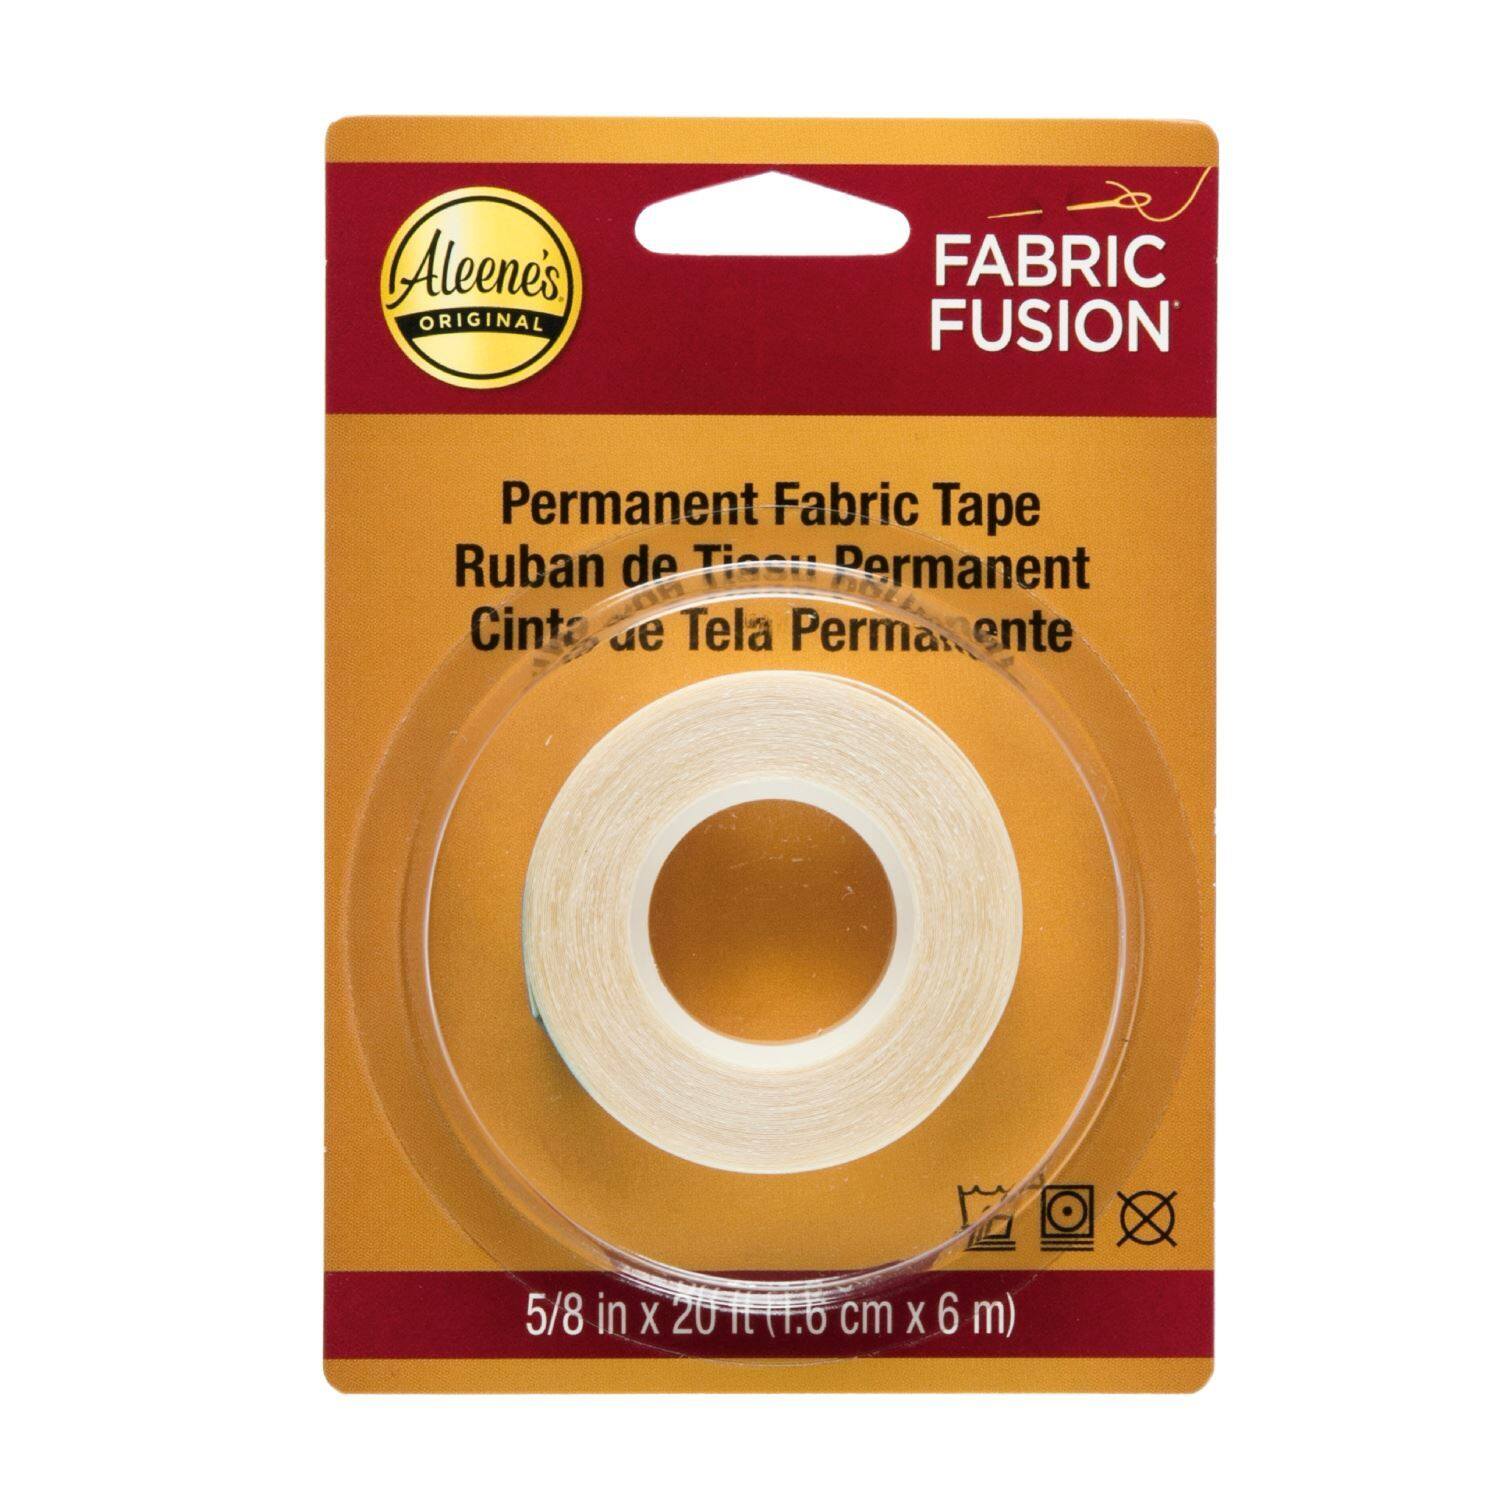 Aleene's Original Glues - Aleenes Fabric Fusion Peel and Stick